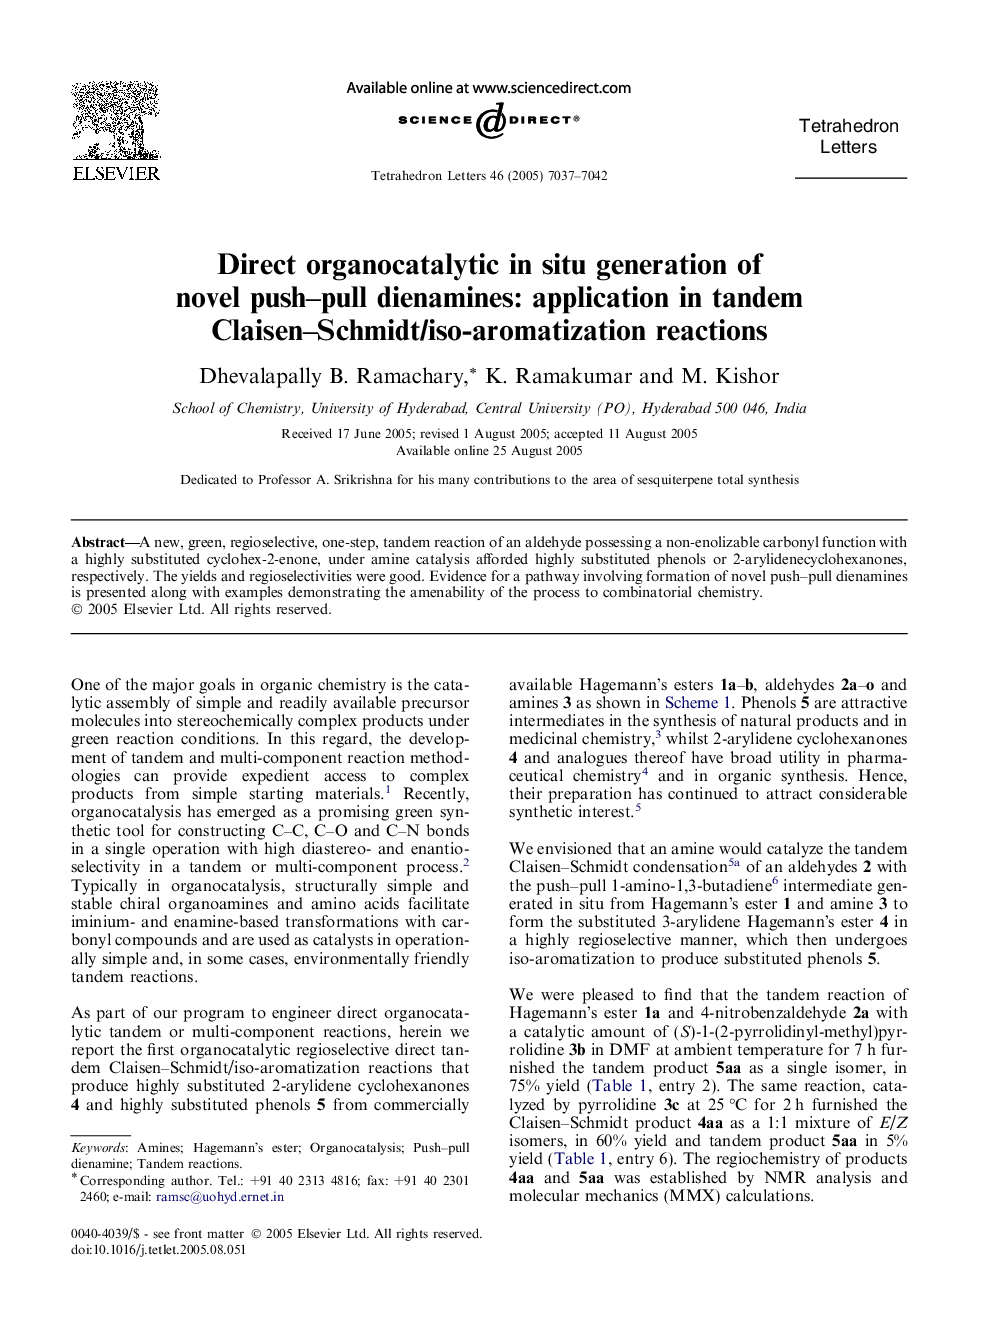 Direct organocatalytic in situ generation of novel push-pull dienamines: application in tandem Claisen-Schmidt/iso-aromatization reactions